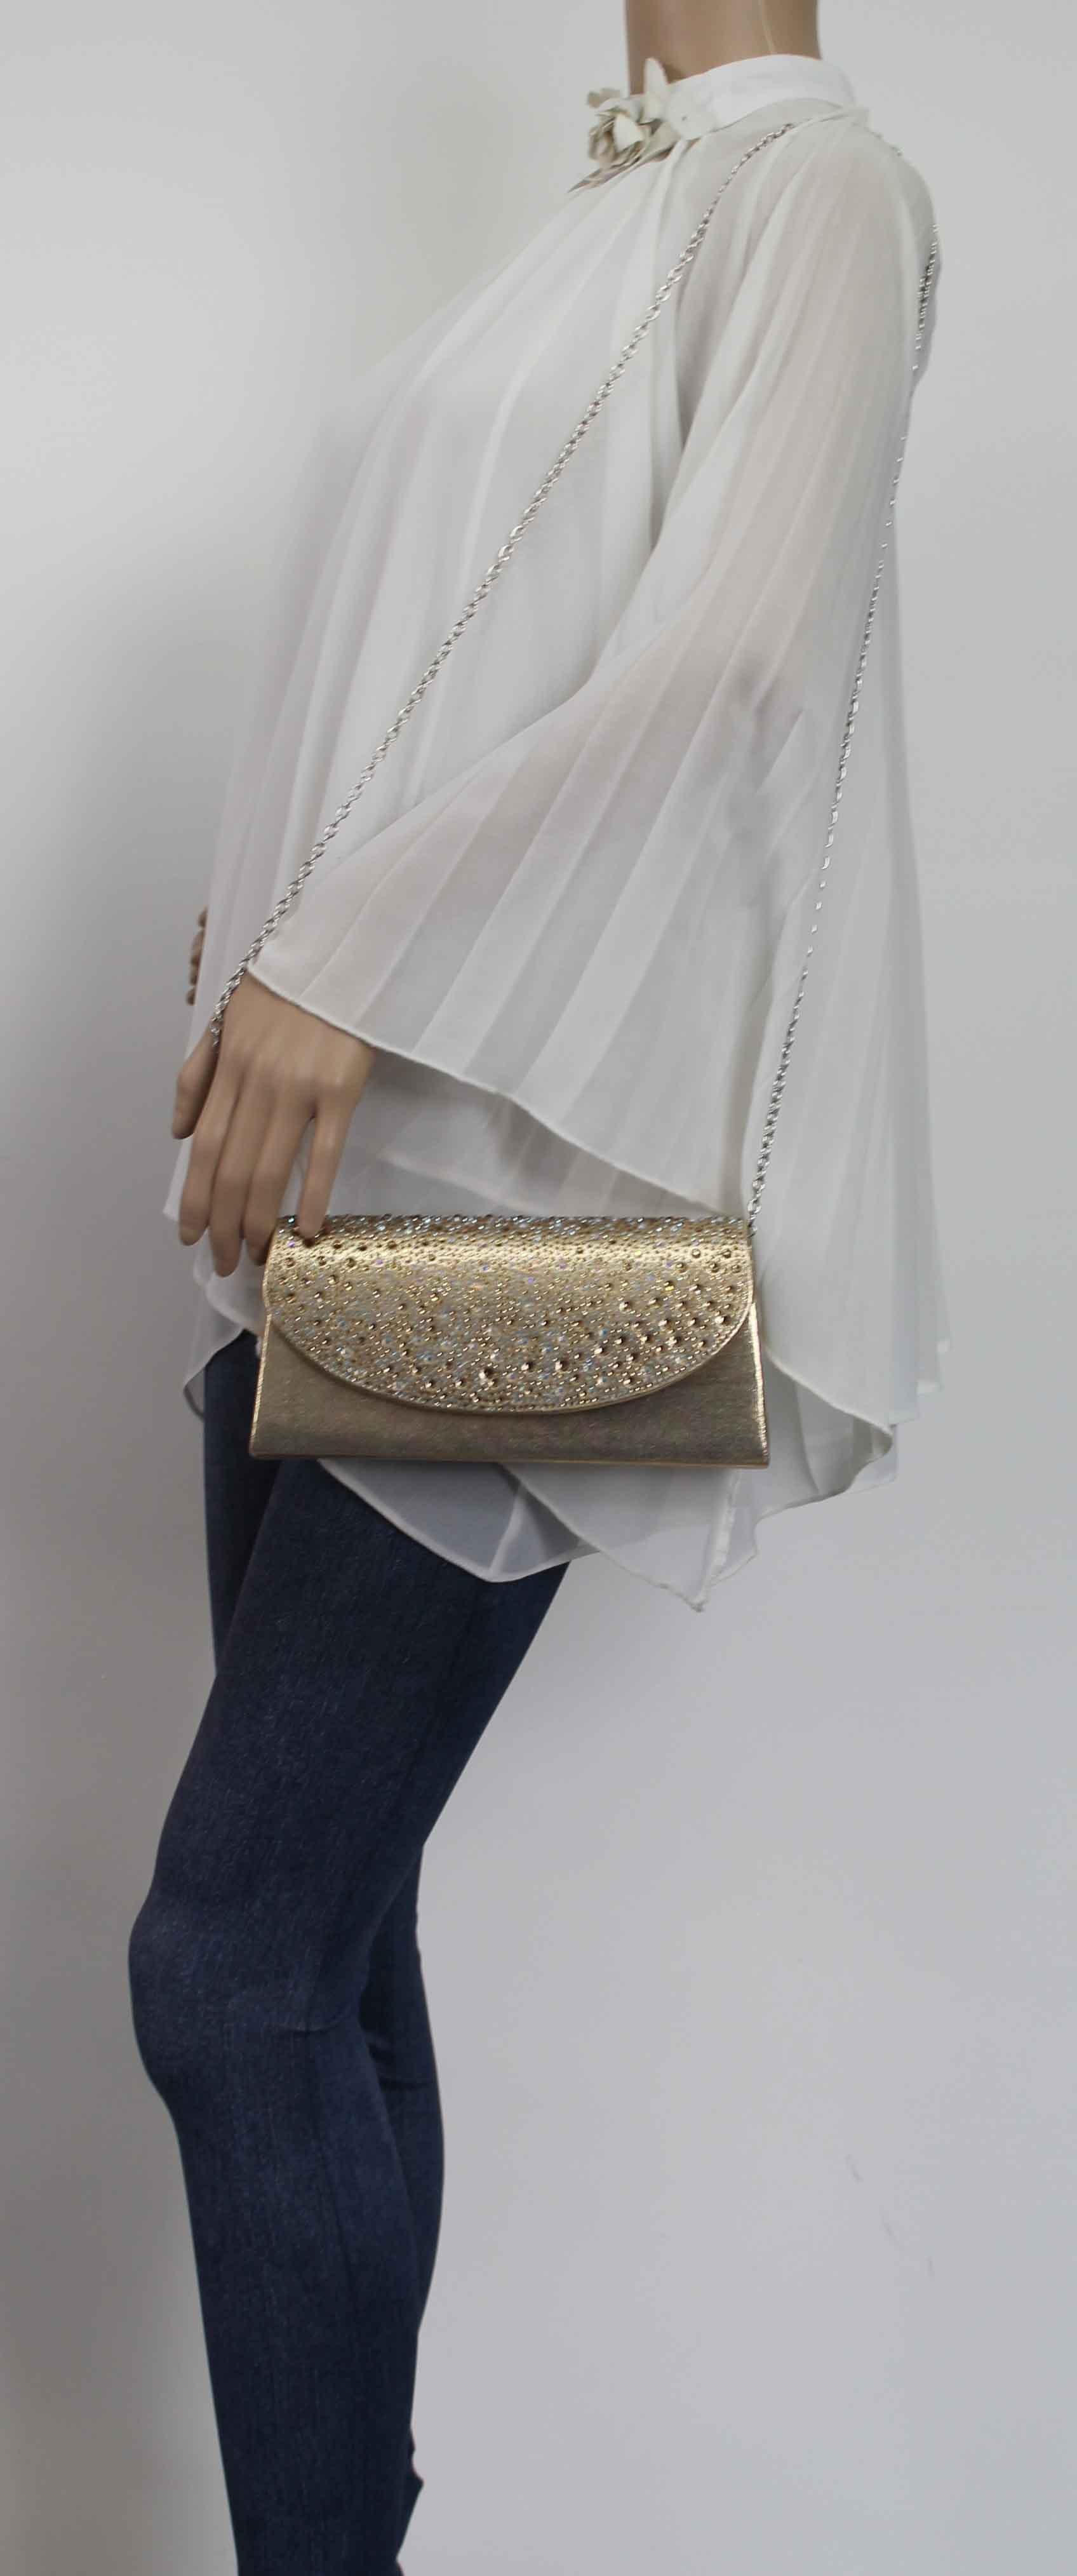 SWANKYSWANS Rita Diamante Clutch Bag Gold Cute Cheap Clutch Bag For Weddings School and Work